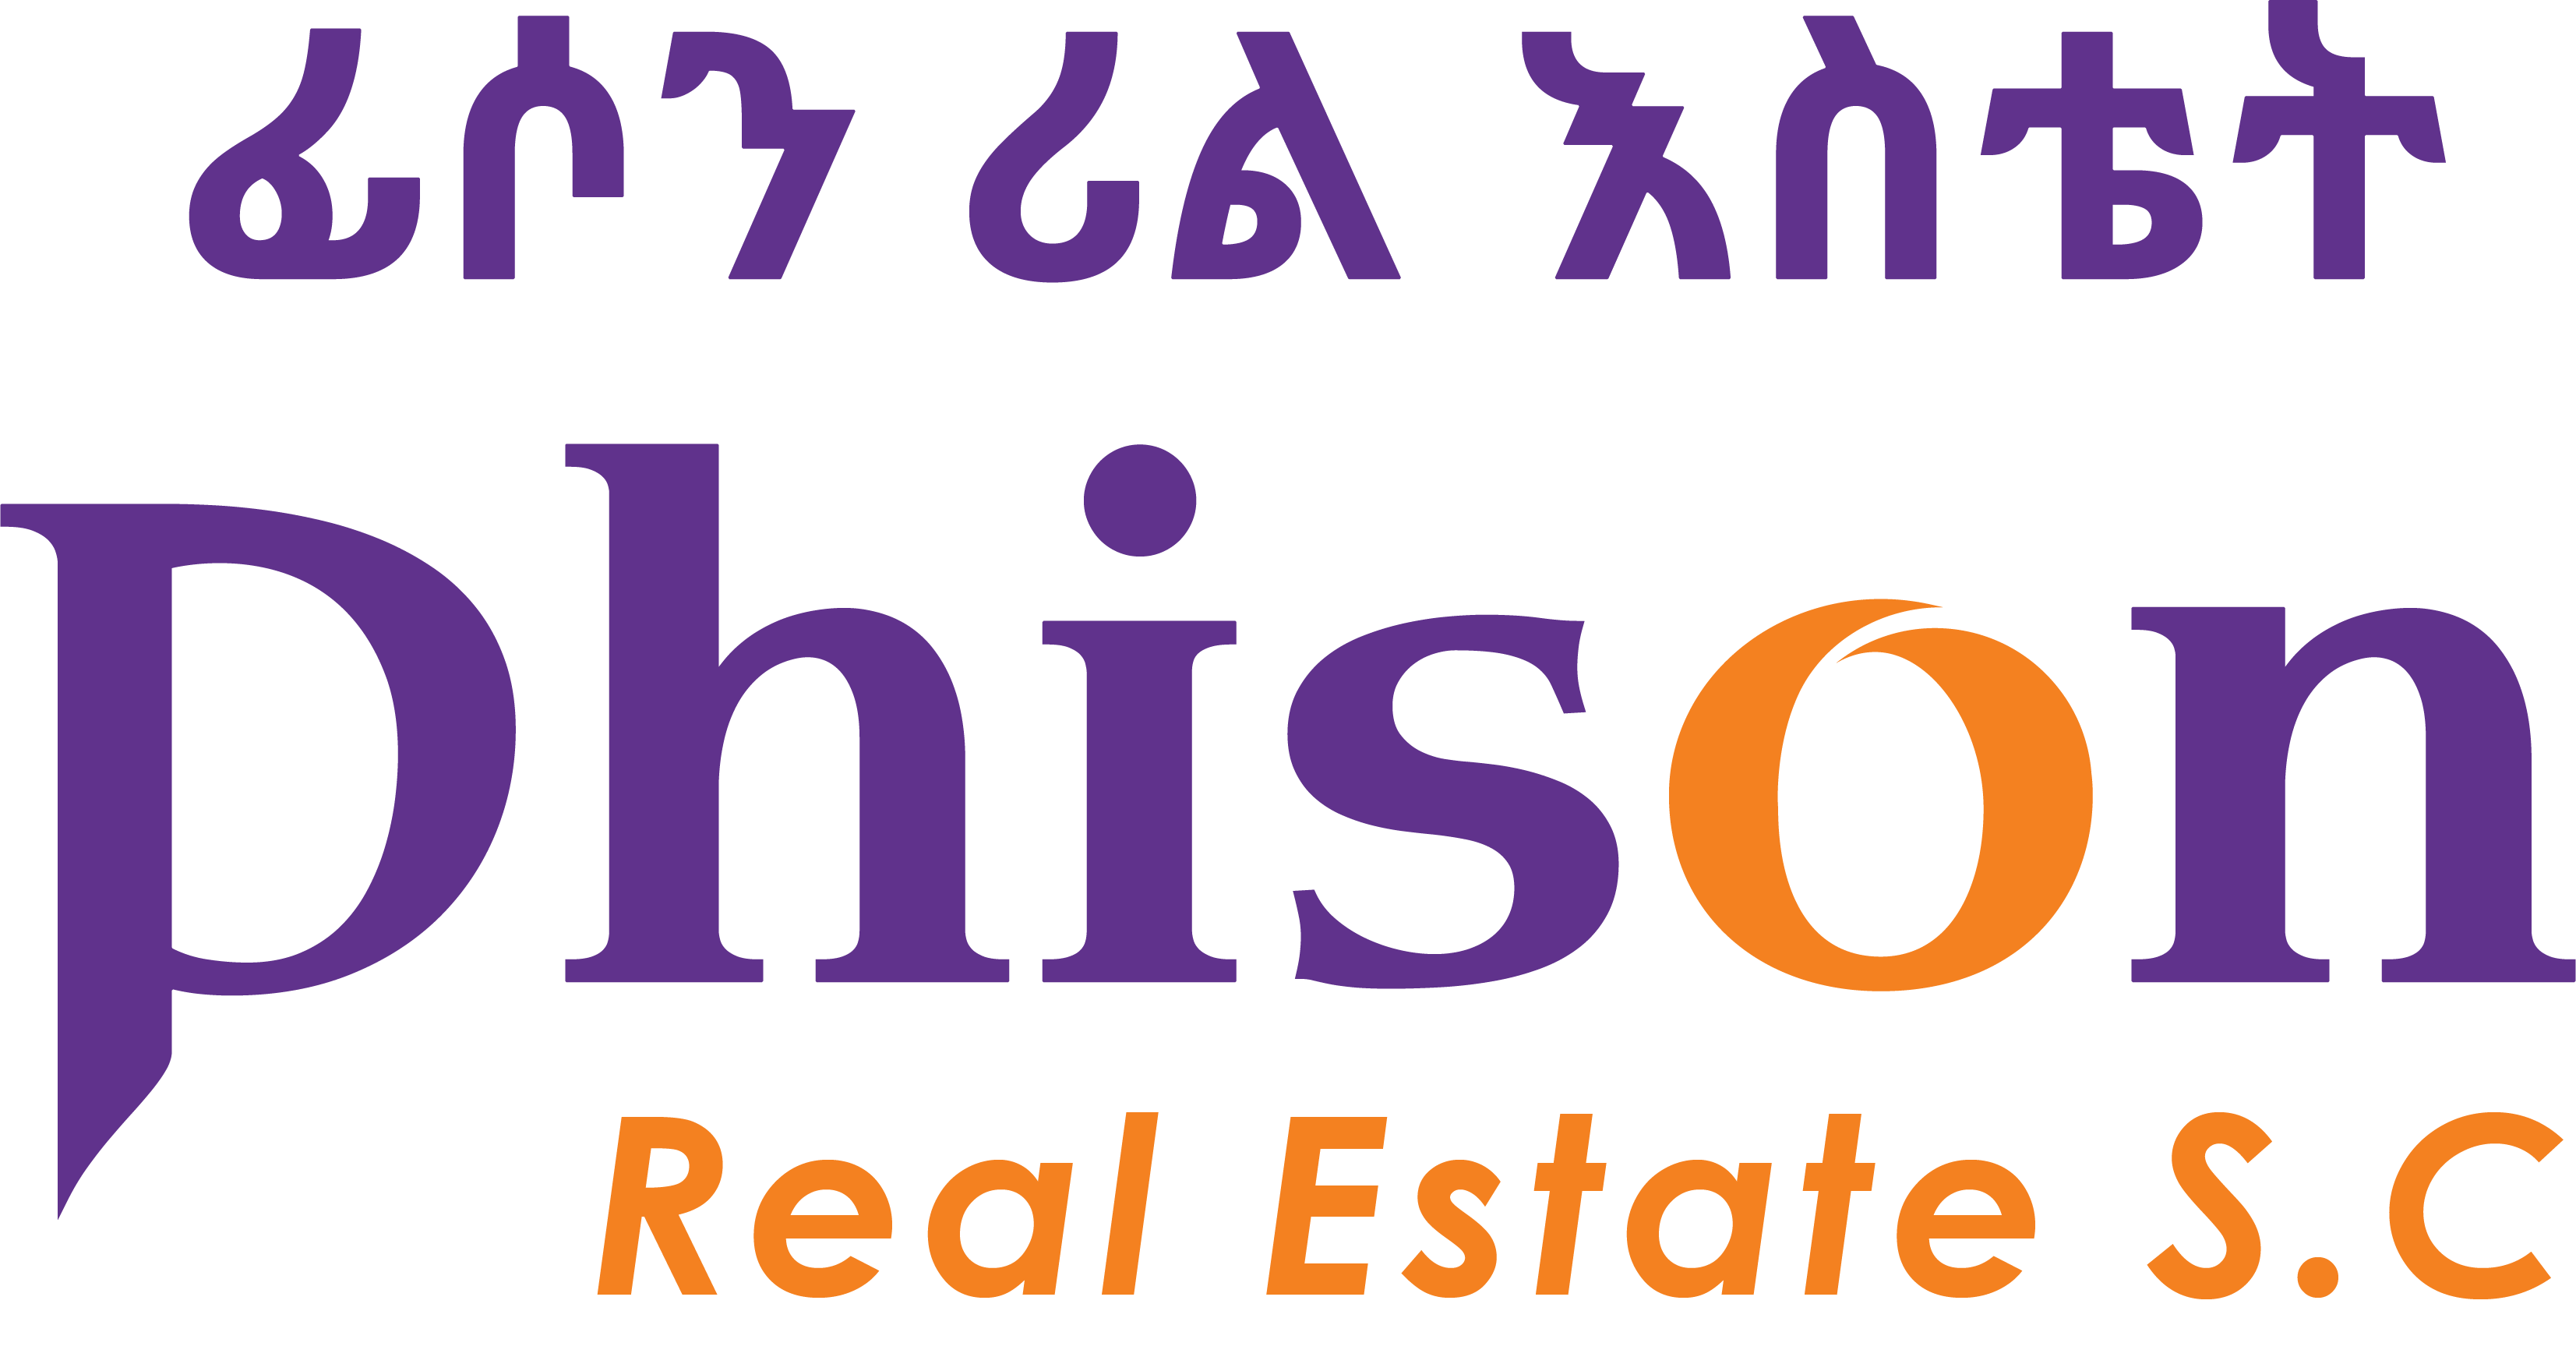 Phison Real Estate logo